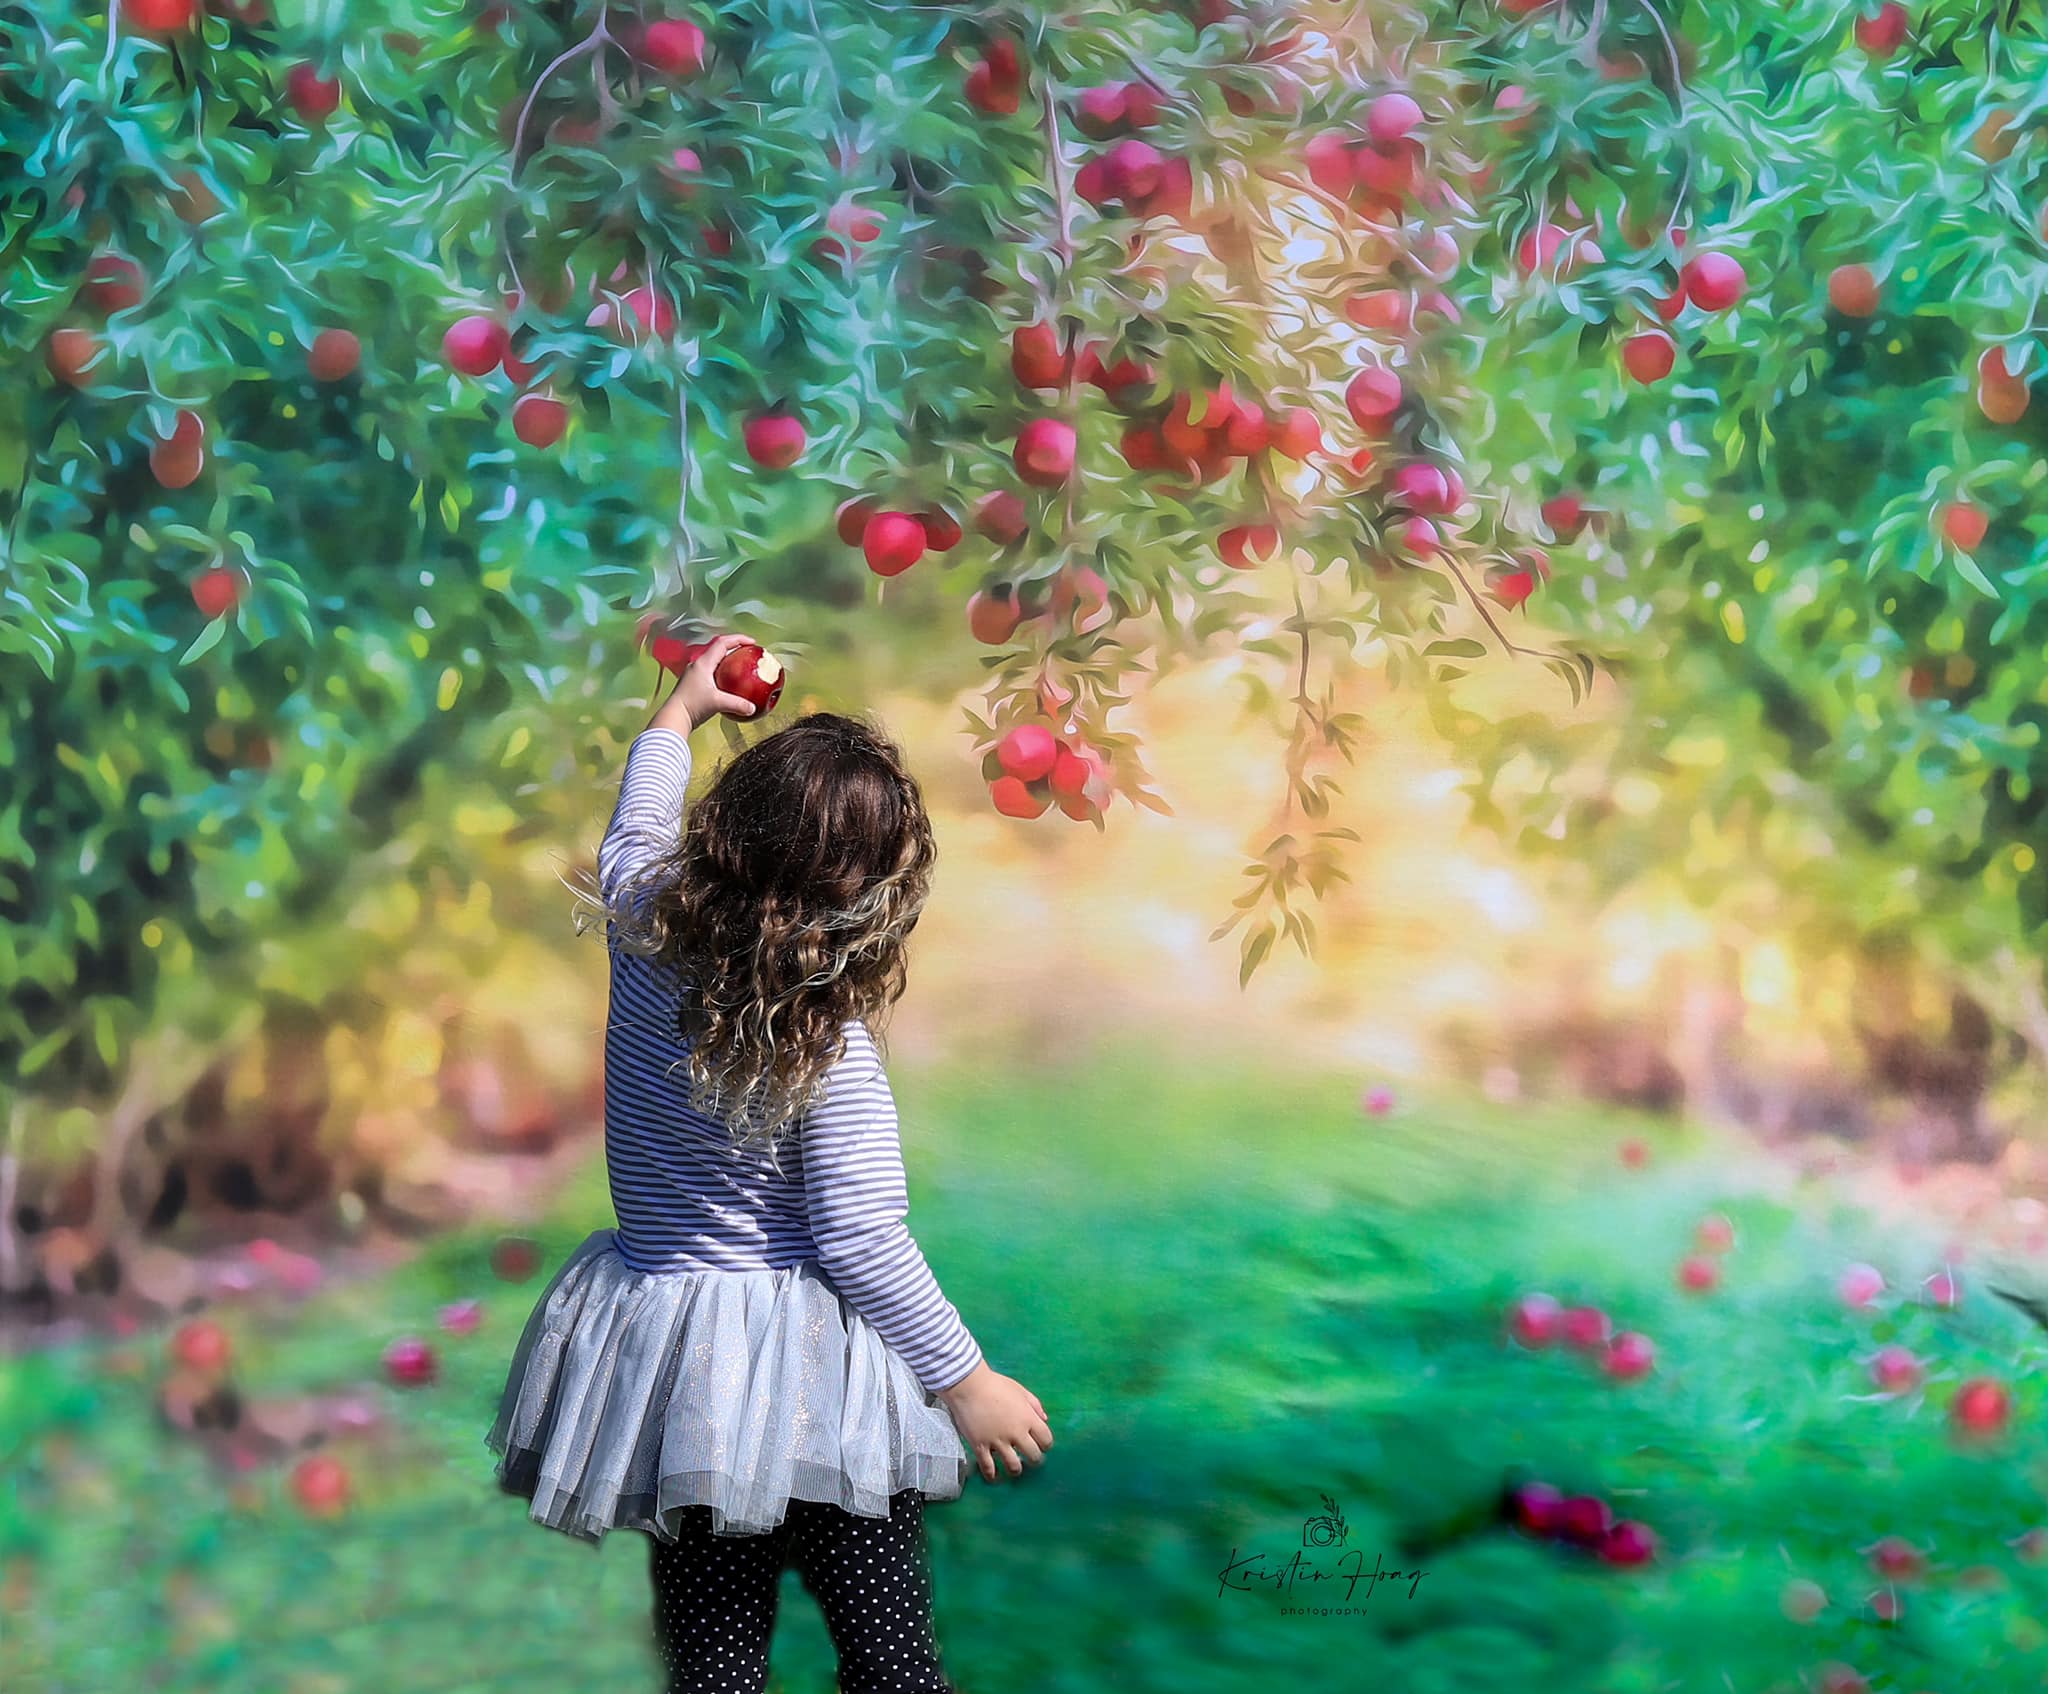 Kate Apple Orchard Summer Backdrop for Photography Designed by Lisa Granden